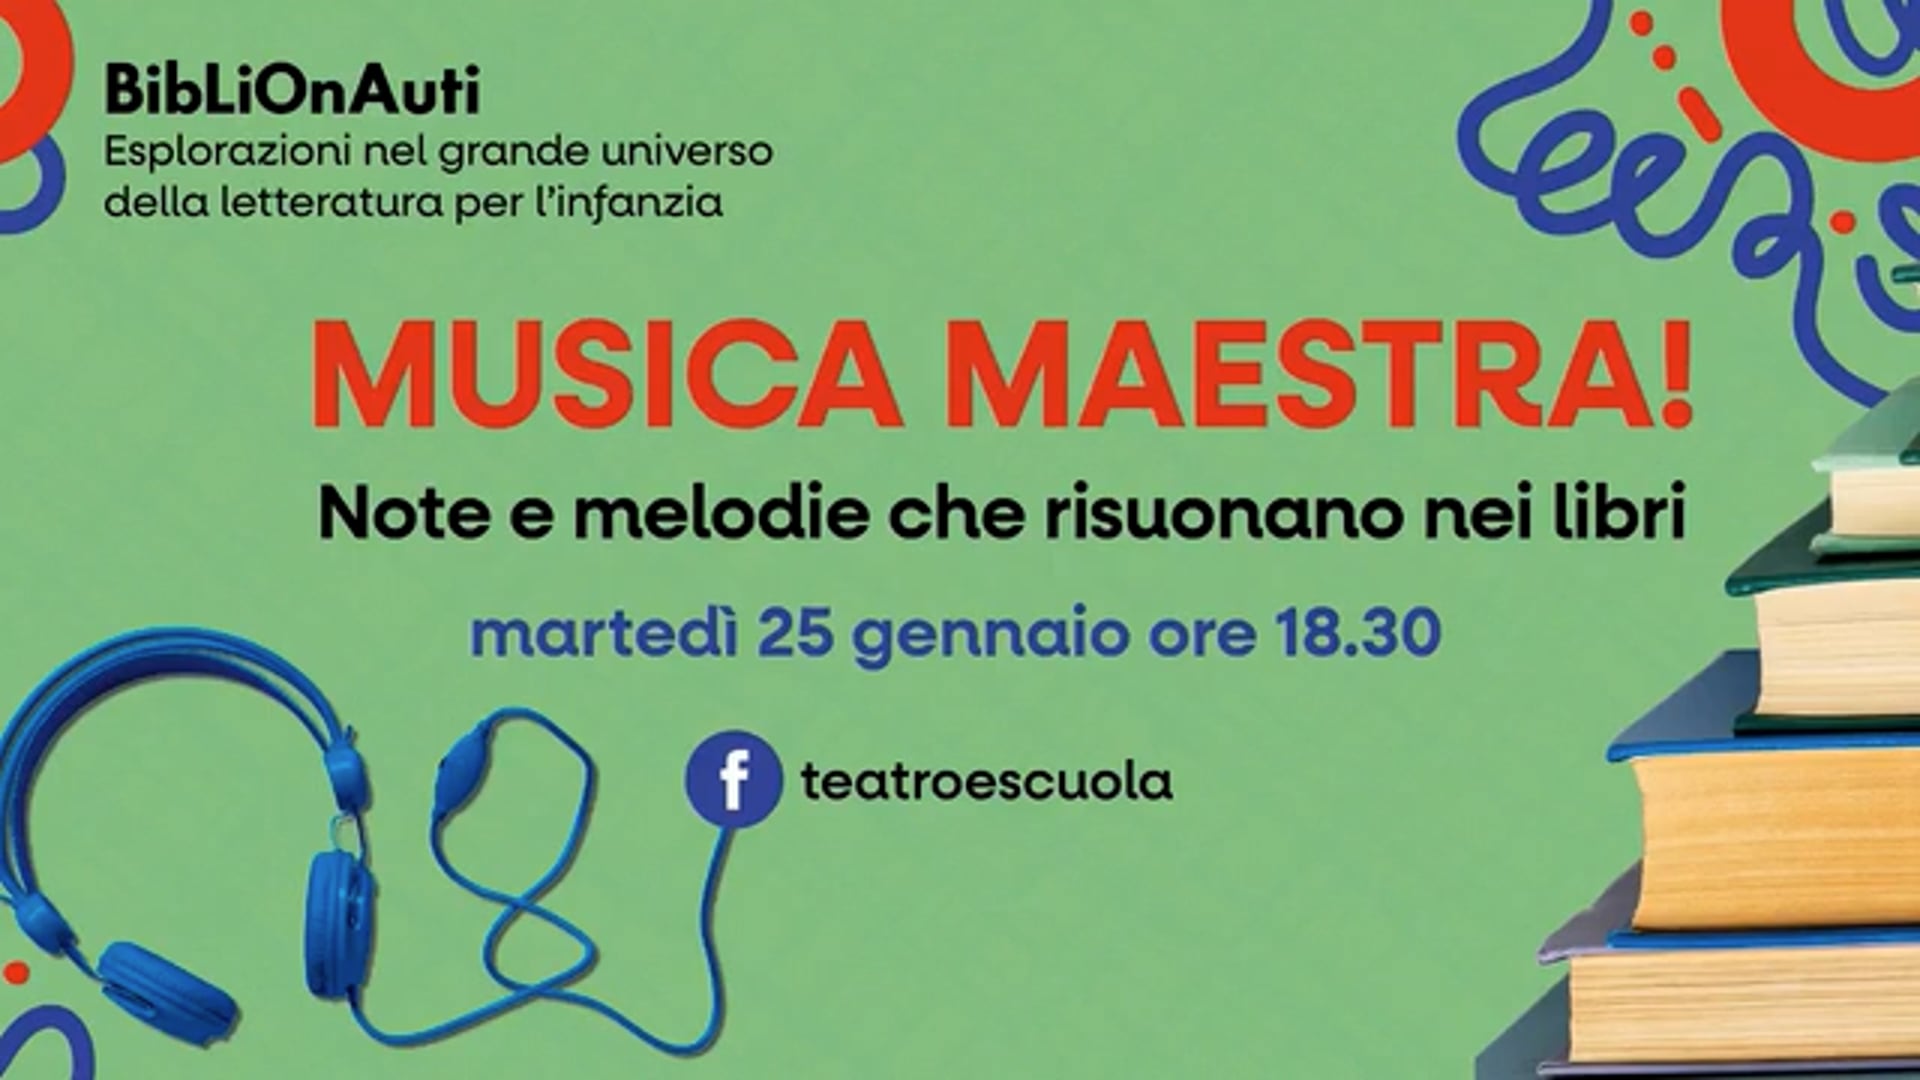 Biblionauti_ Musica Maestra.mp4